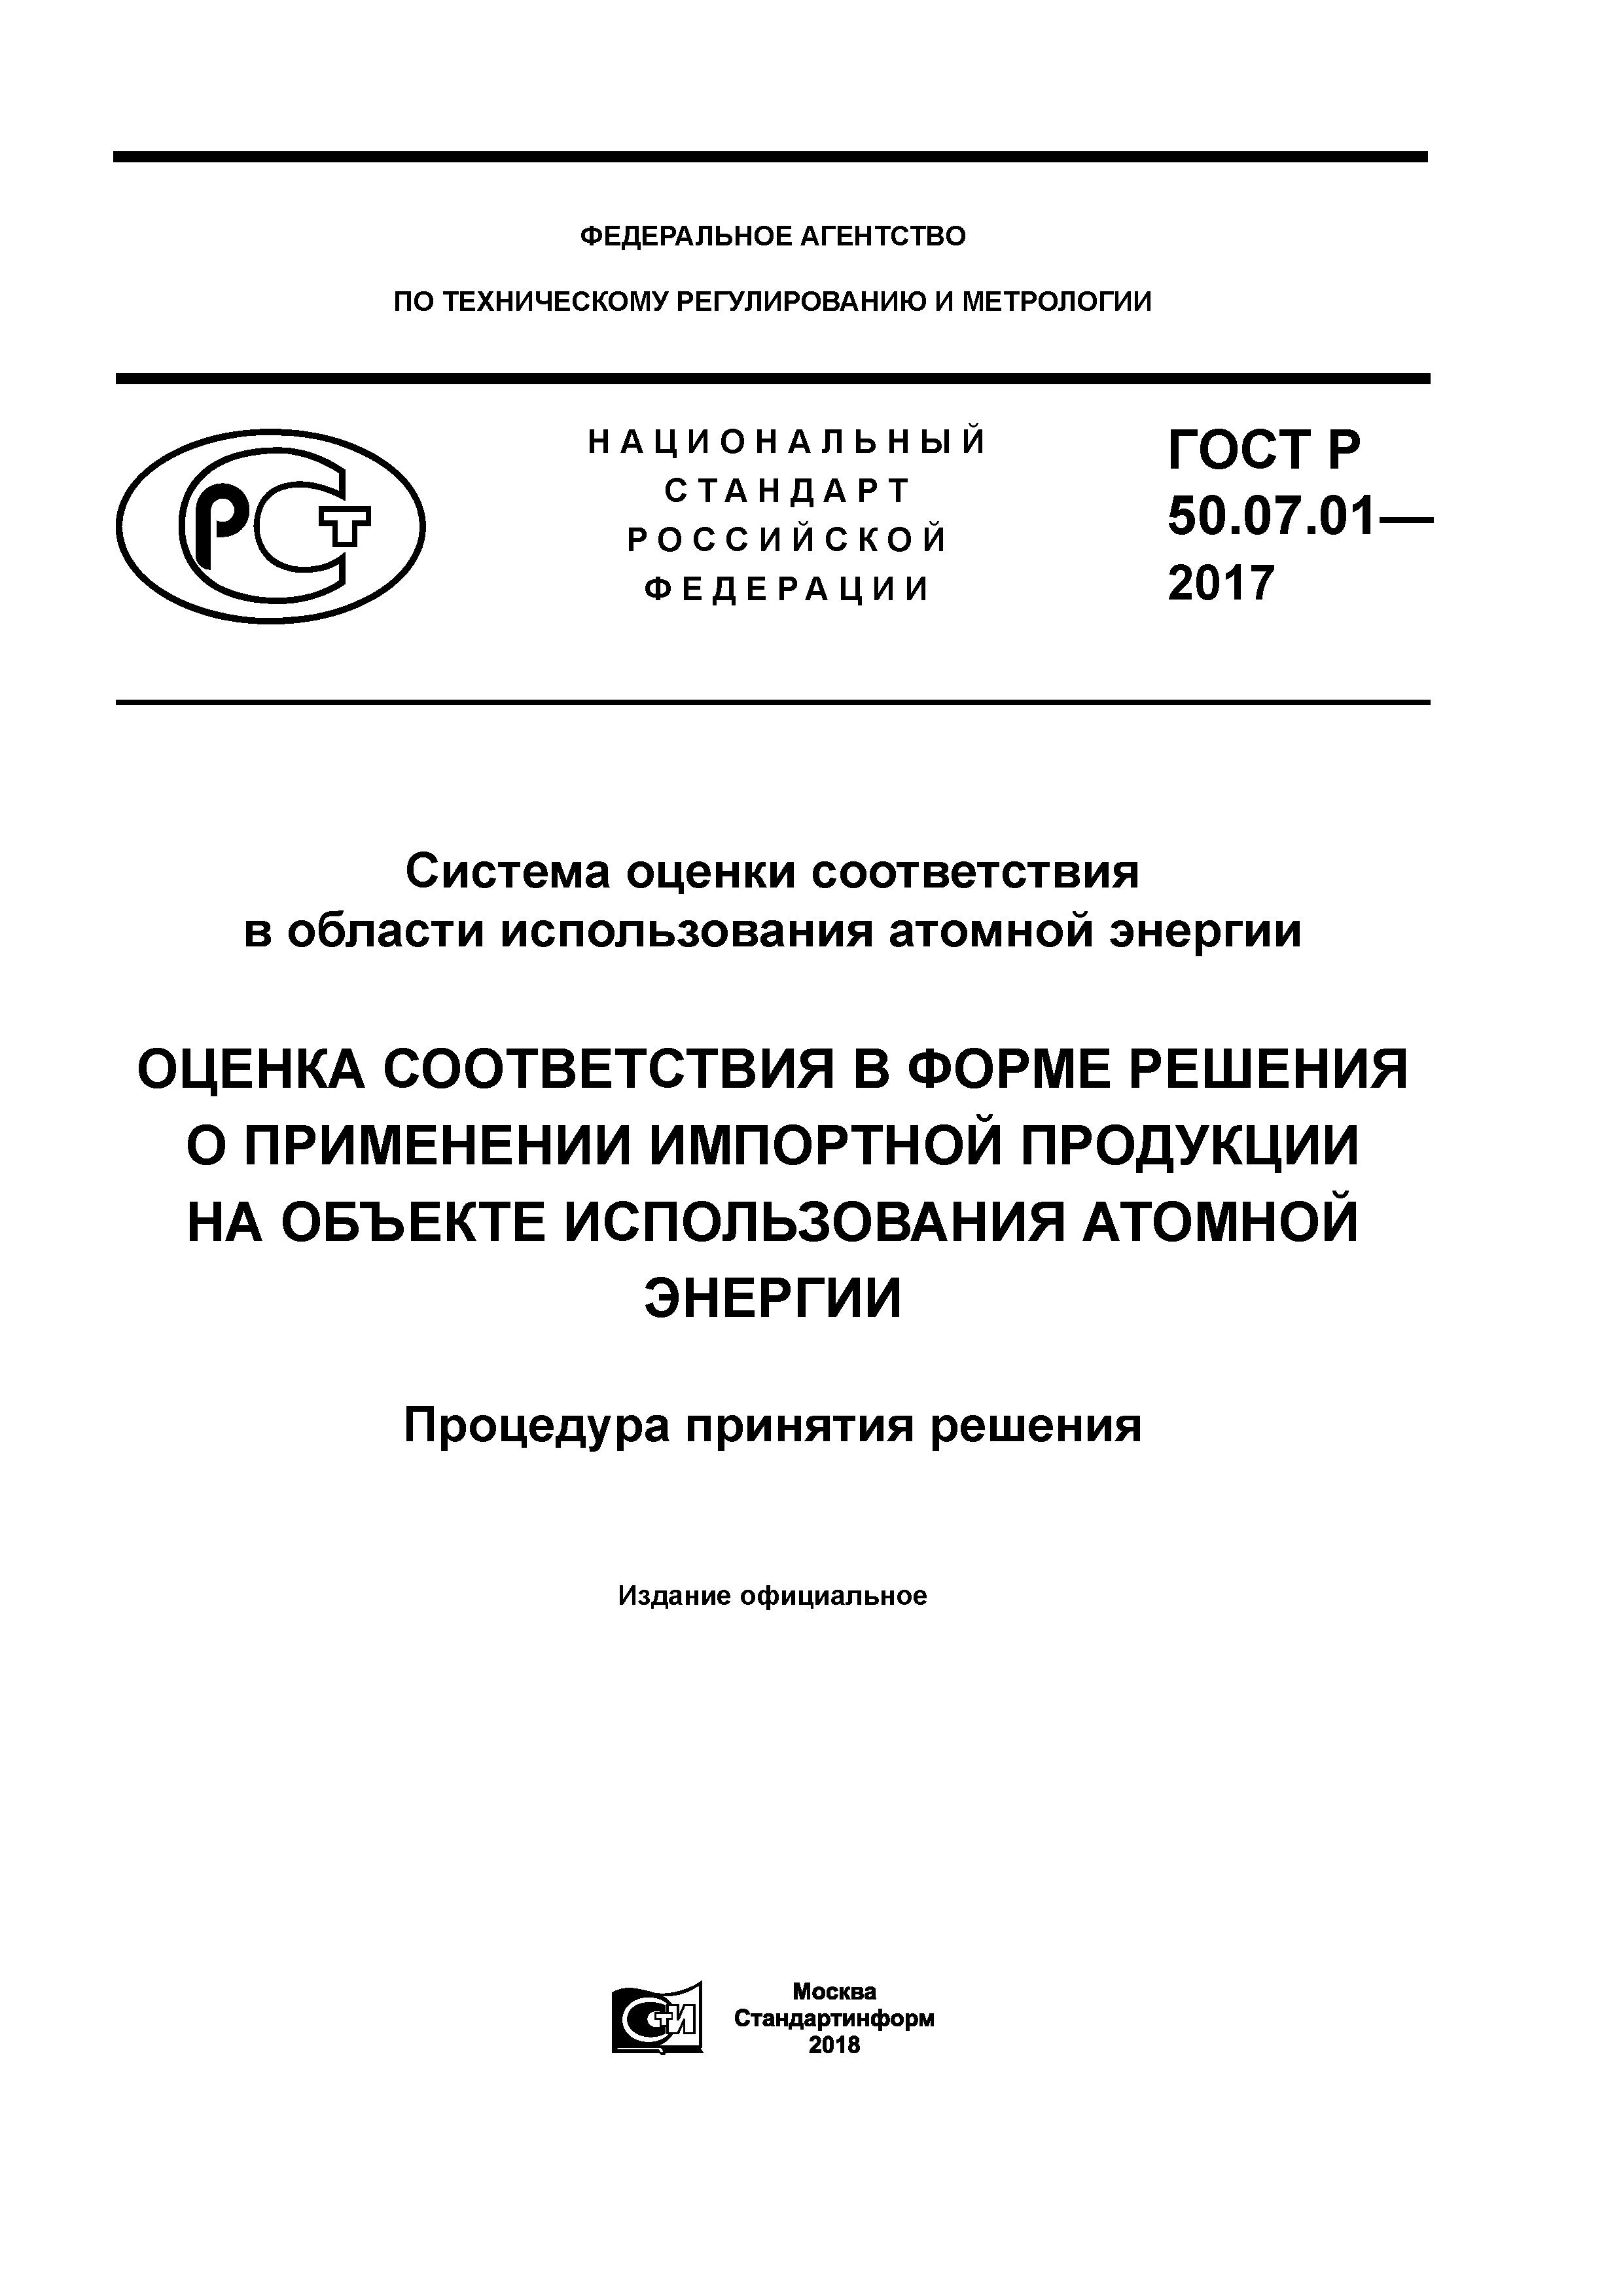 ГОСТ Р 50.07.01-2017